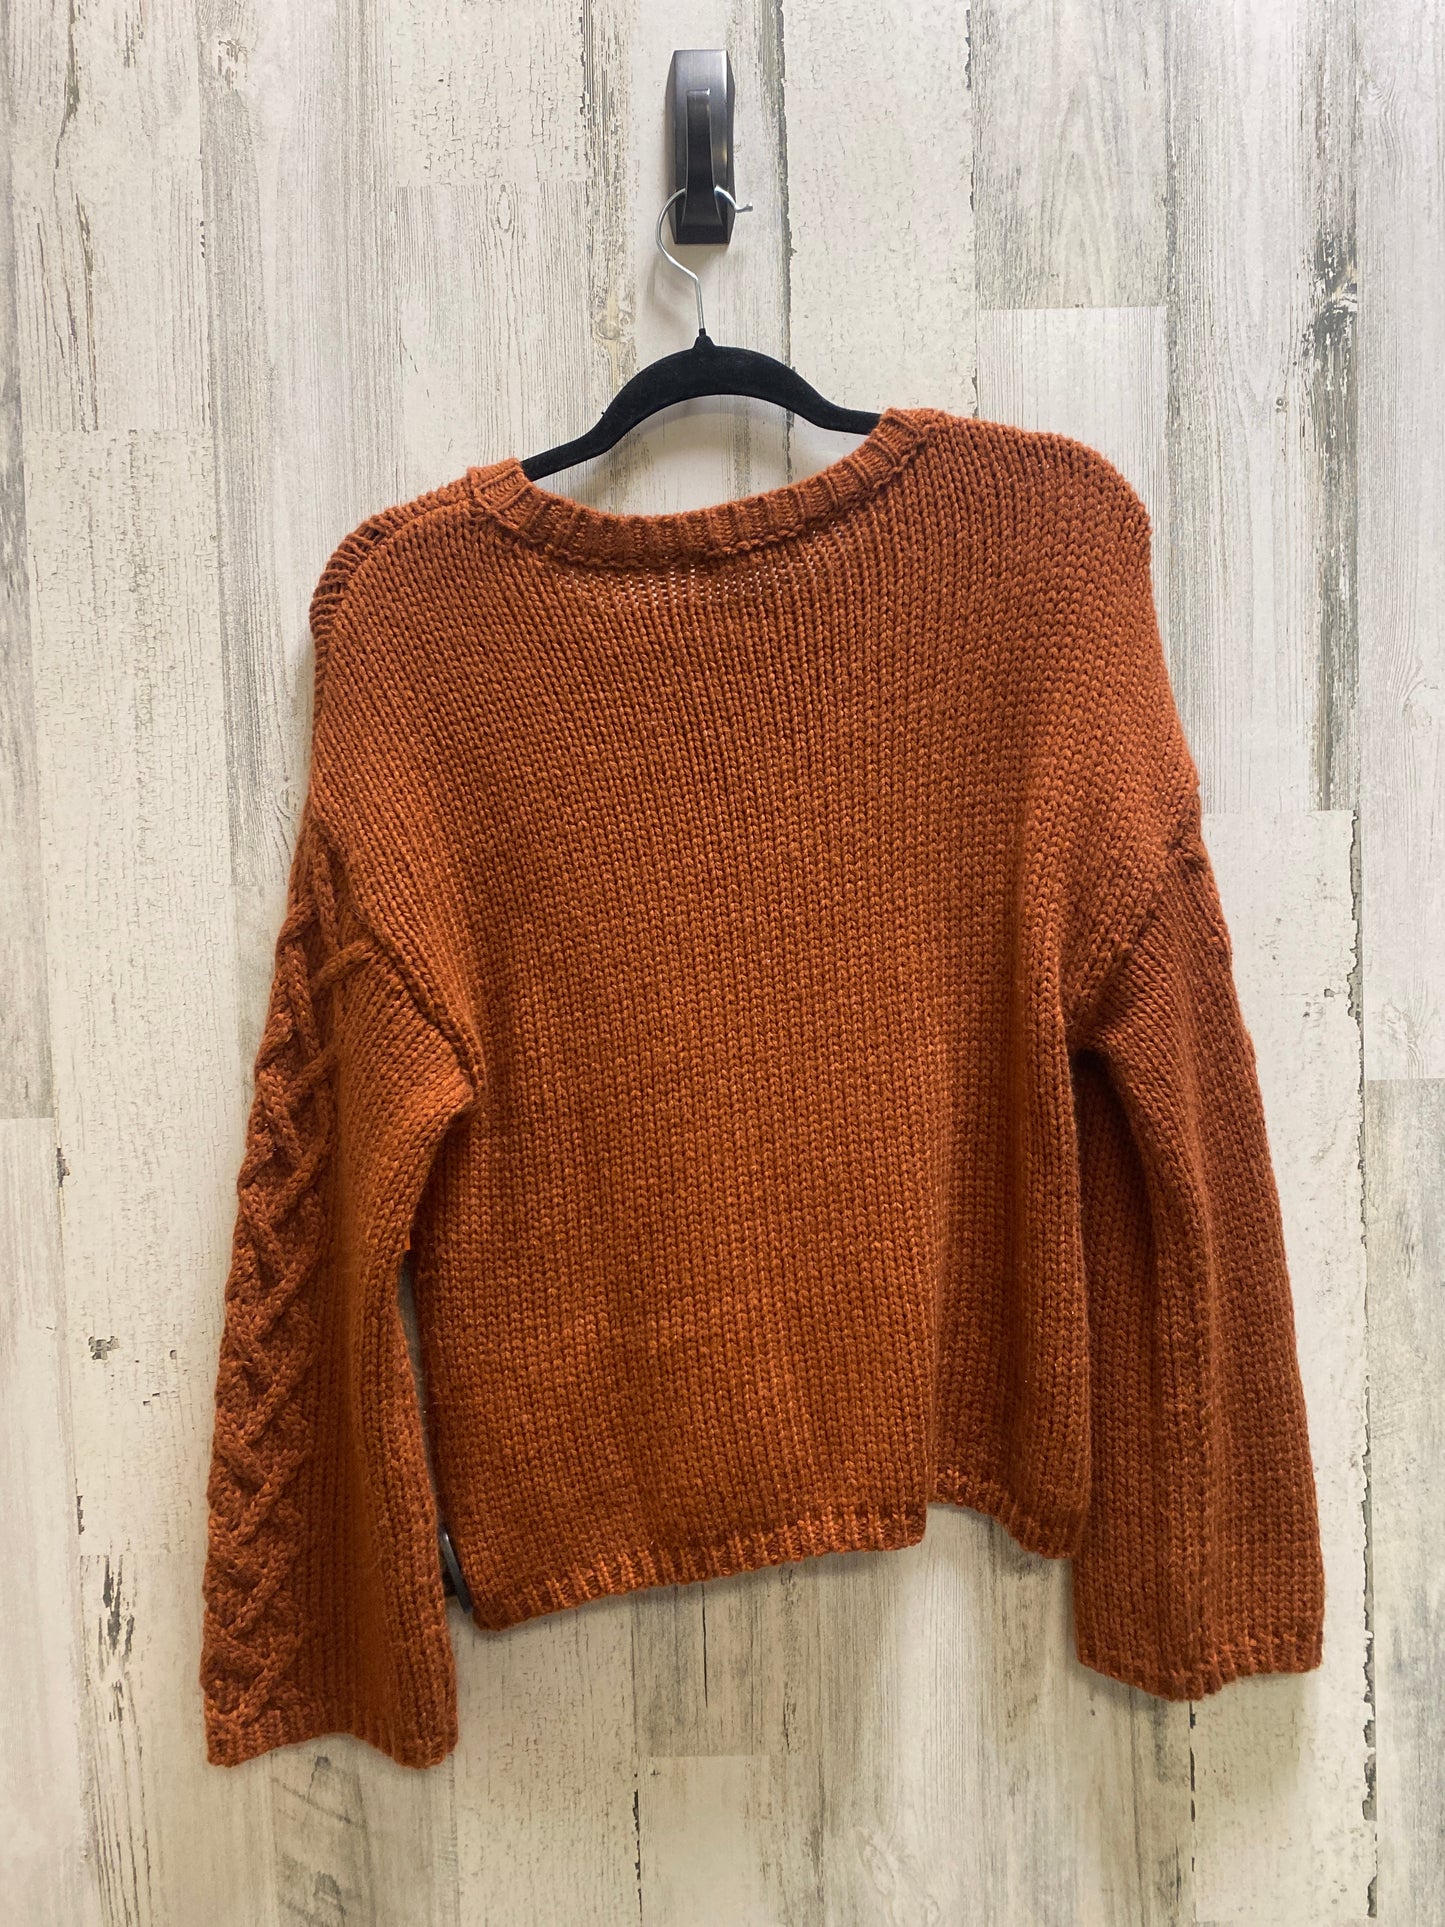 Sweater By Bb Dakota  Size: S